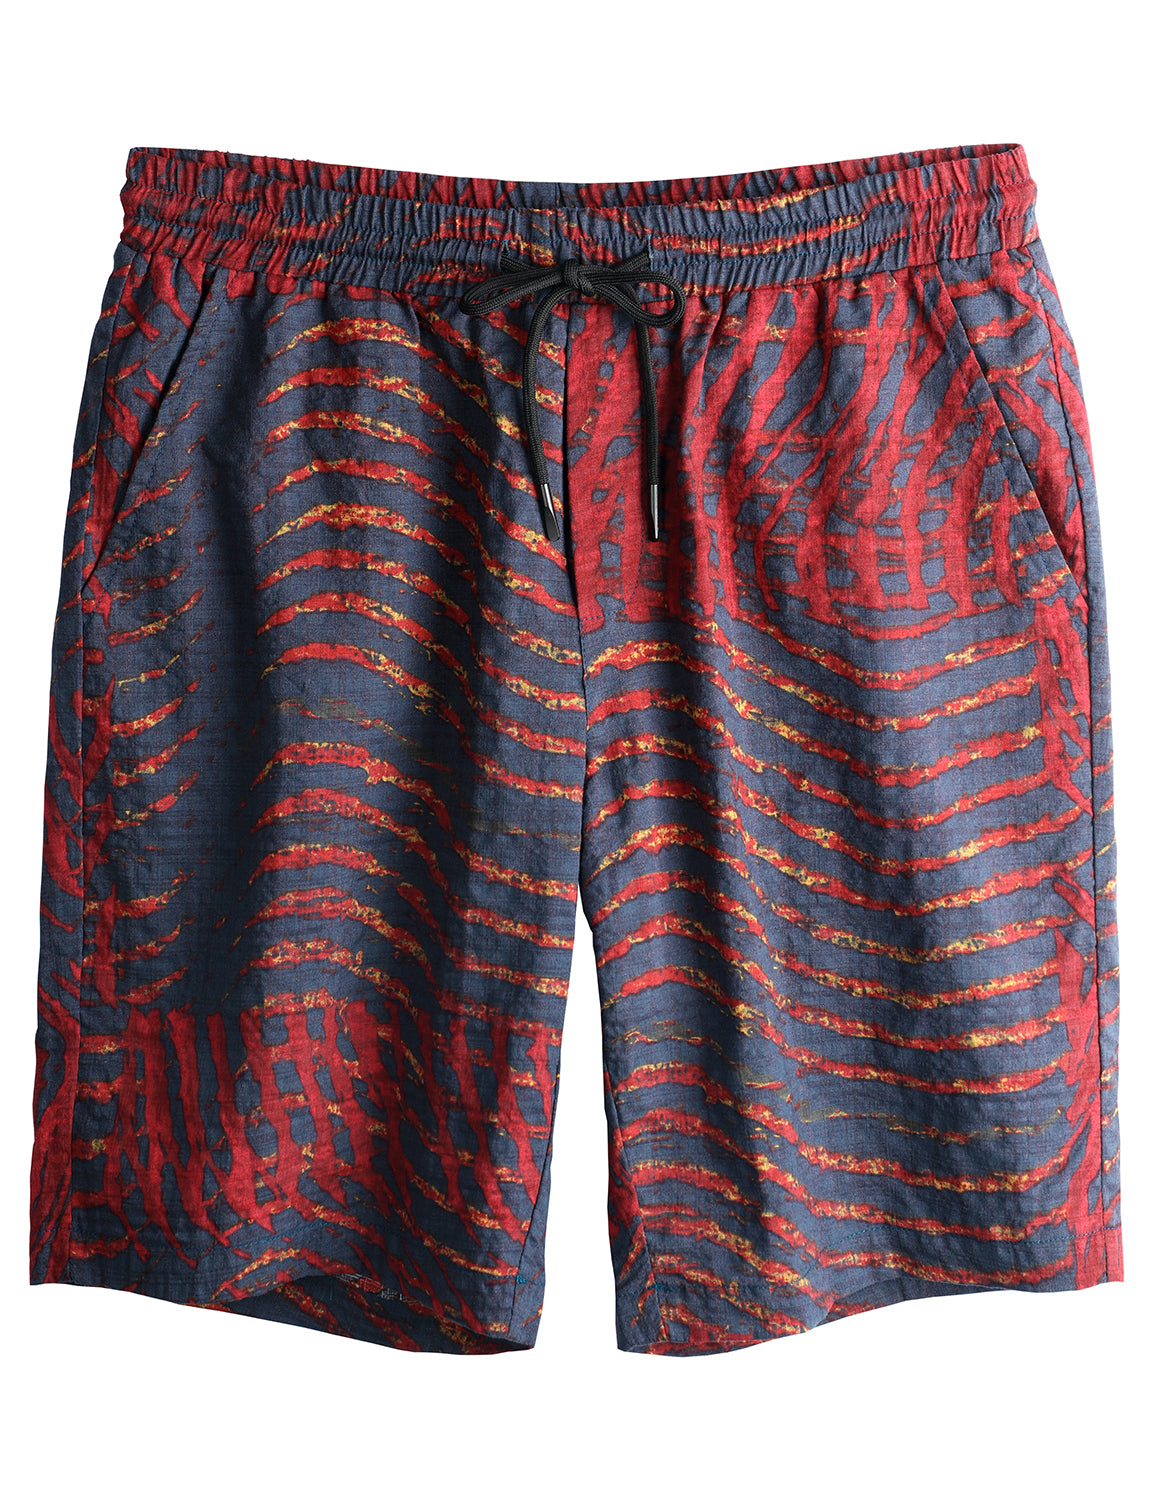 Men's Hawaiian Casual Cotton Shorts